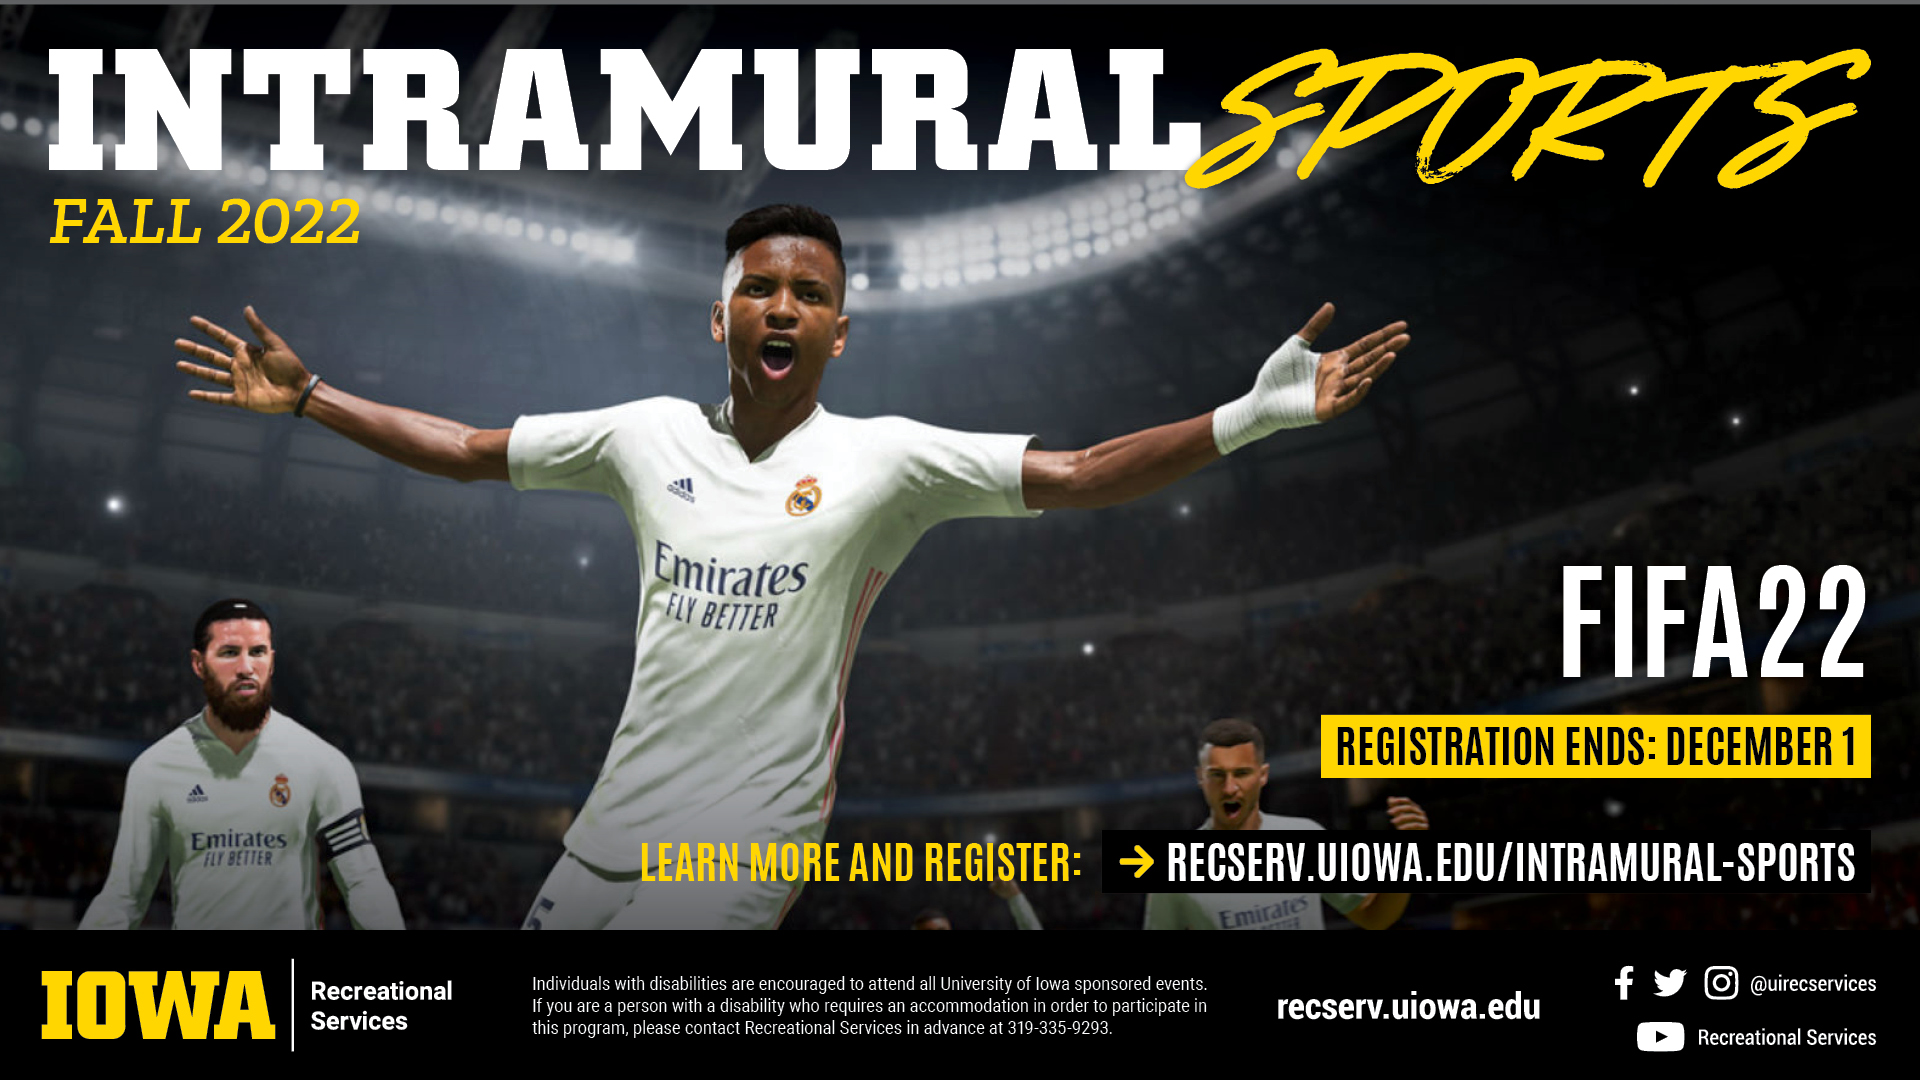 Intramural Sports Fall 2022: FIFA22. Learn more and register at reserv.uiowa.edu/intramural-sports